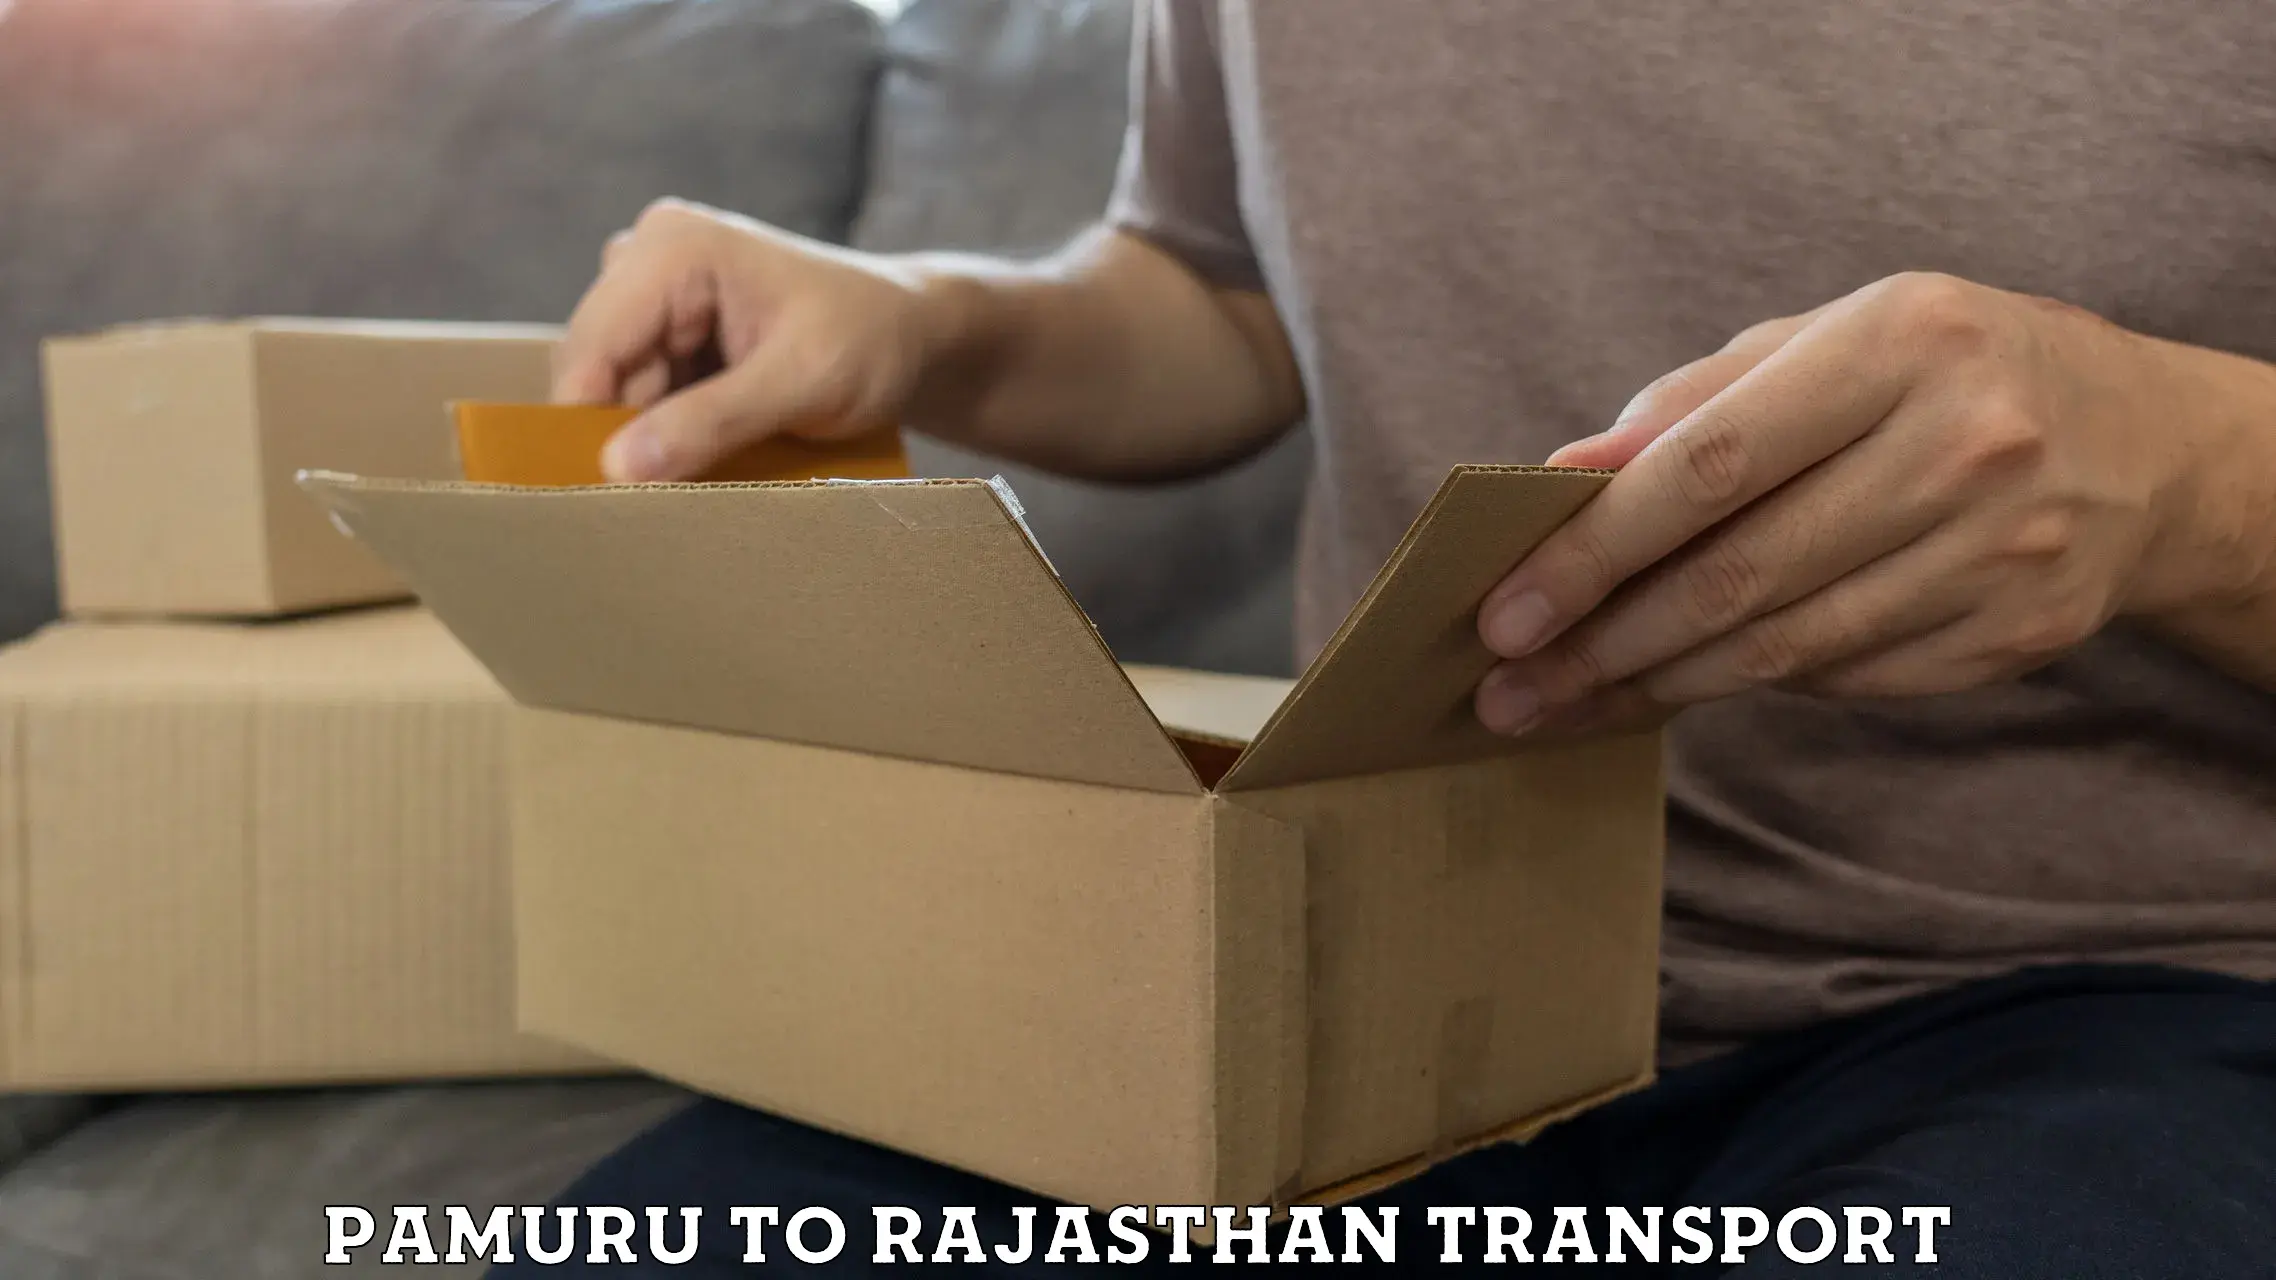 Delivery service Pamuru to Jodhpur